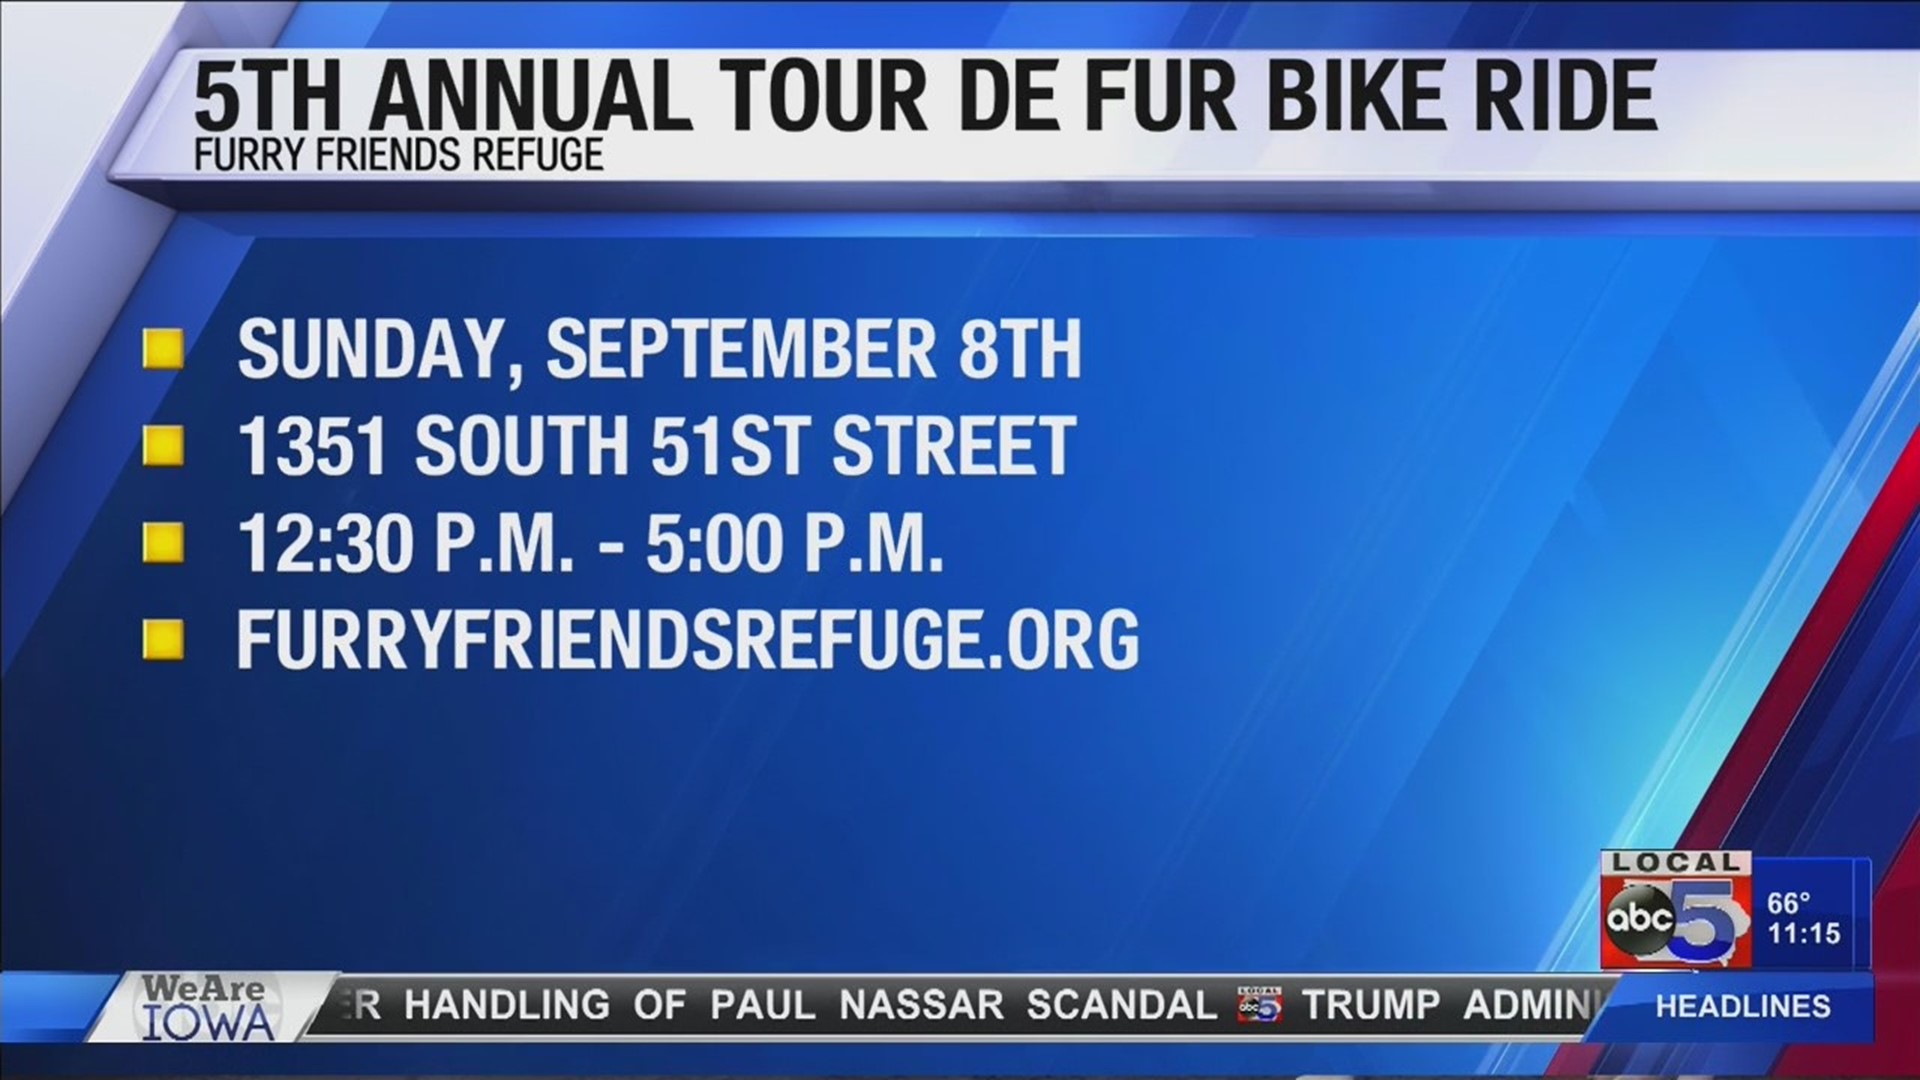 Furry Friends Refuge hosting the 5th Annual Tour De Fur Bike Ride this Sunday.